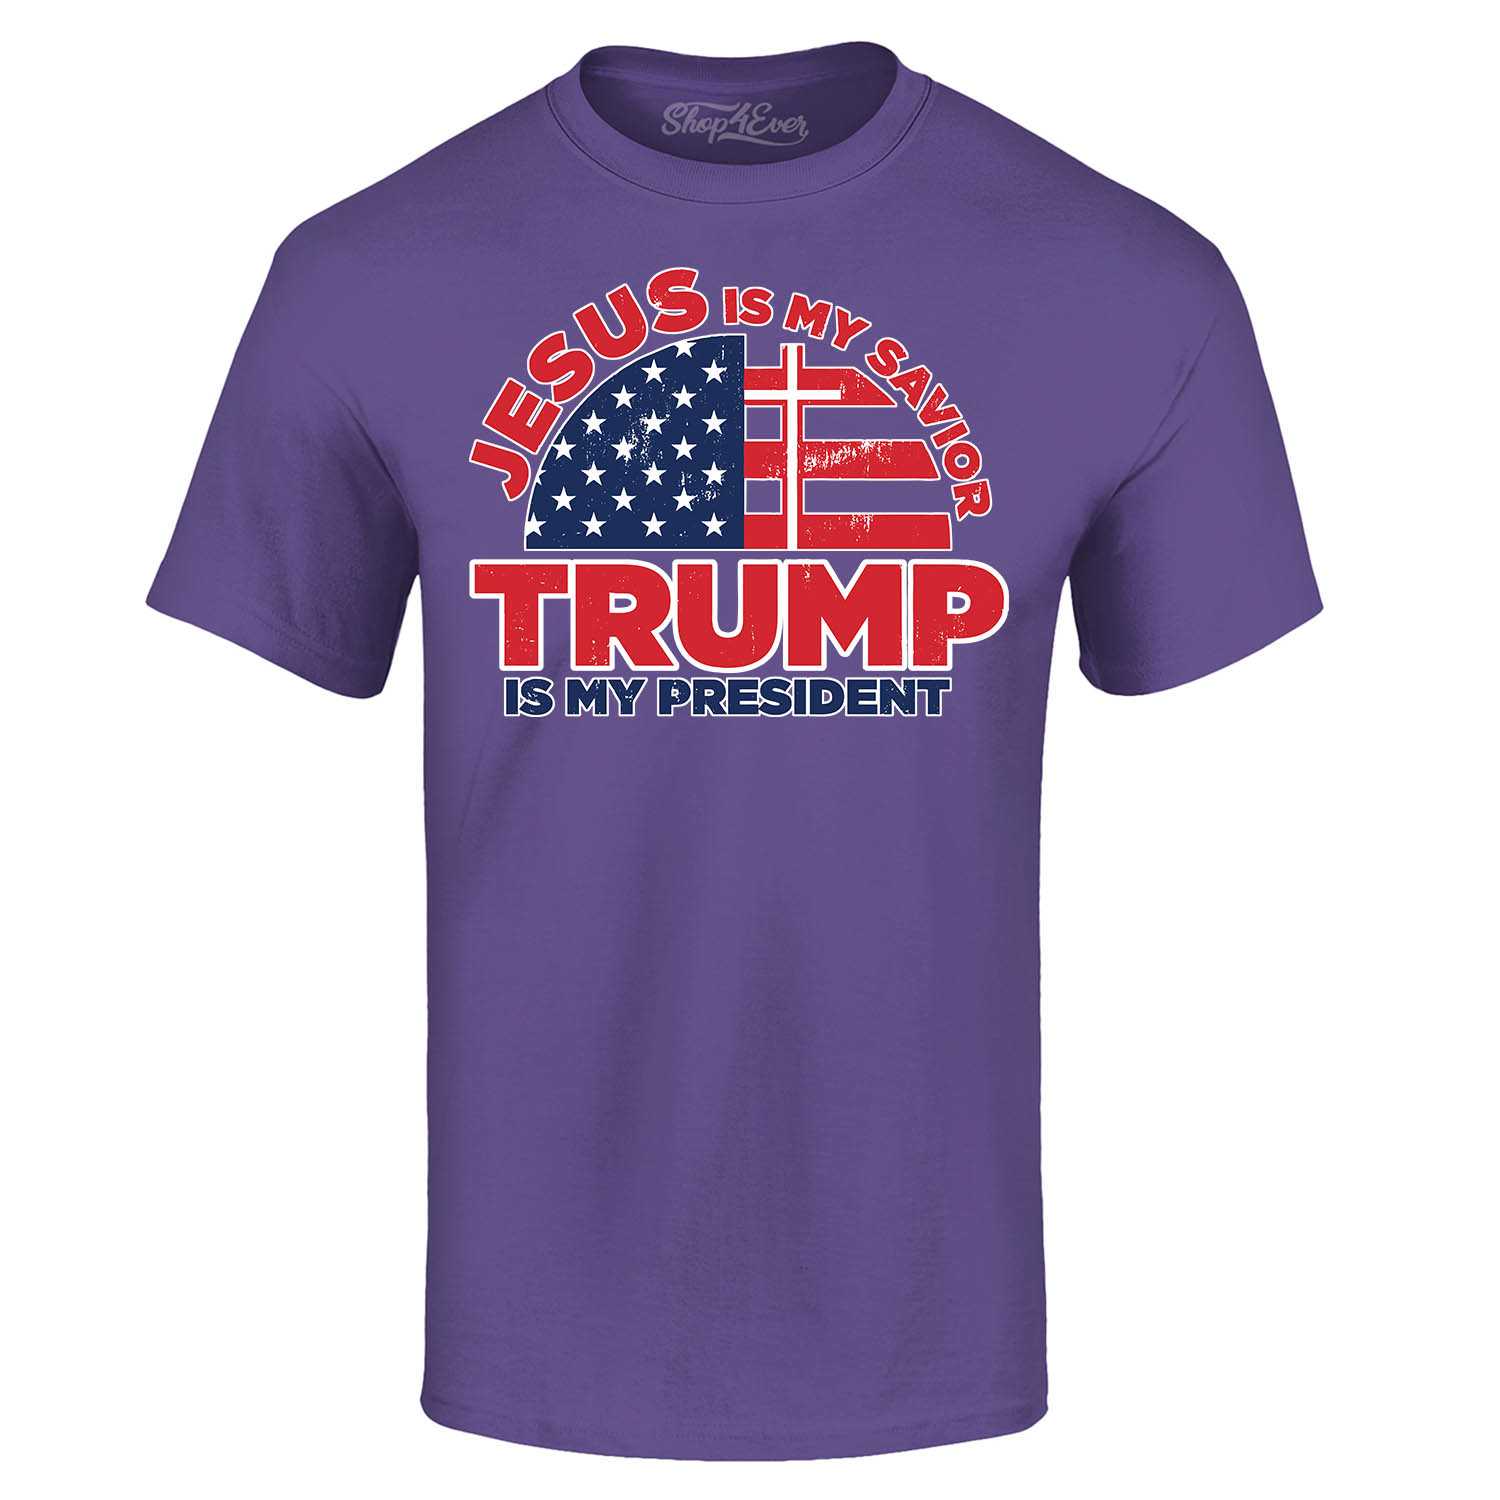 Jesus Is My Savior Trump Is My President Light Logo T Shirt 2020 MAGA Election